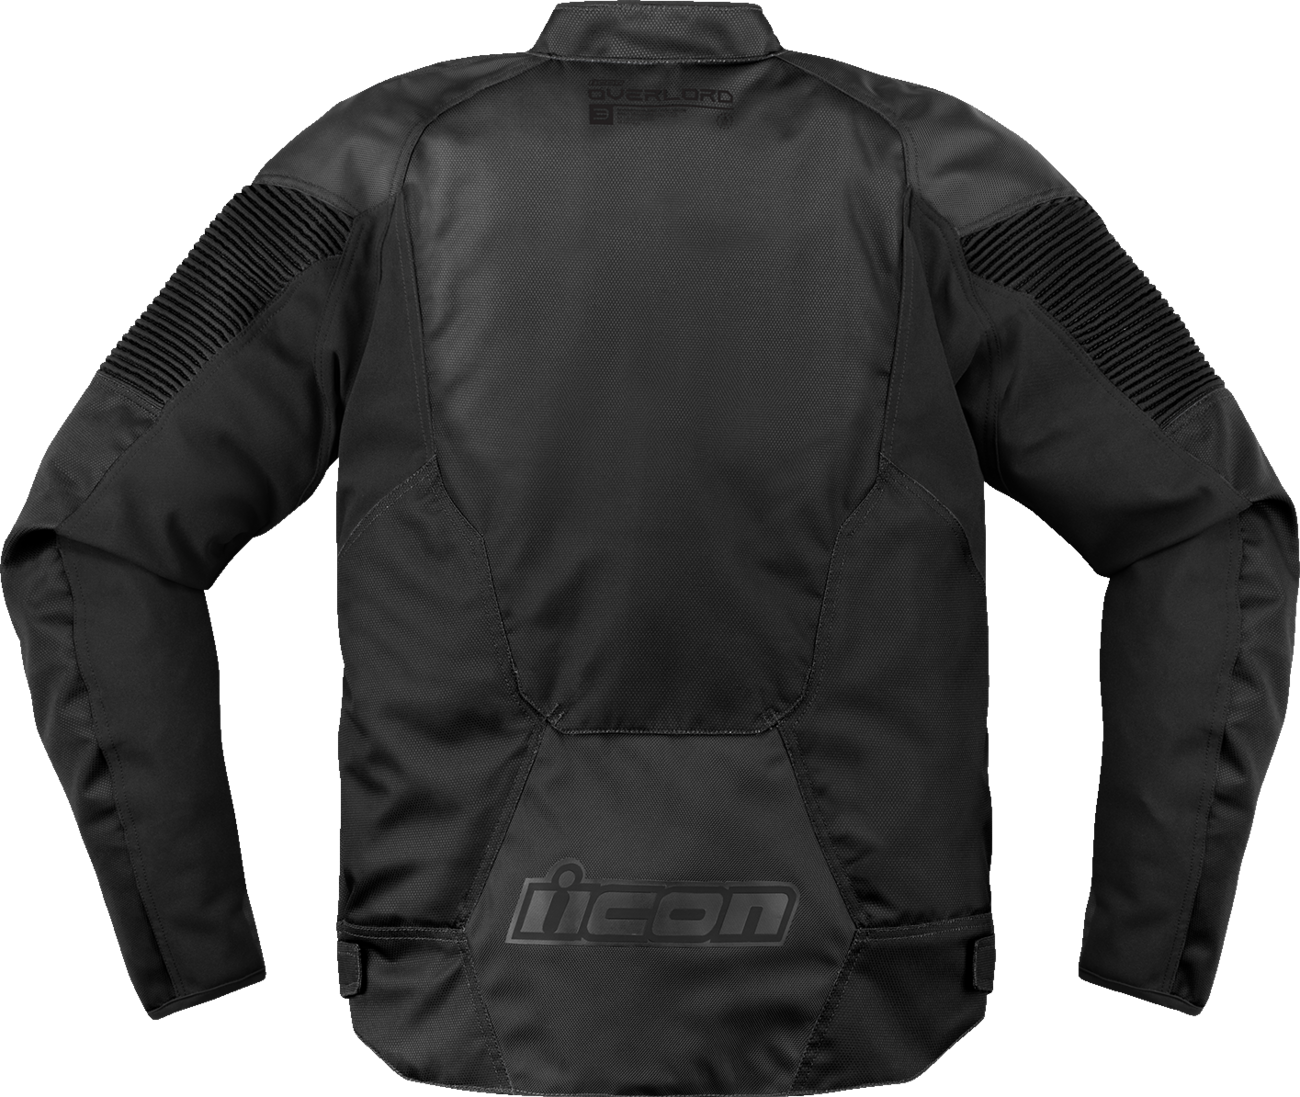 ICON Overlord3™ CE Jacket - Black - Large 2820-6688